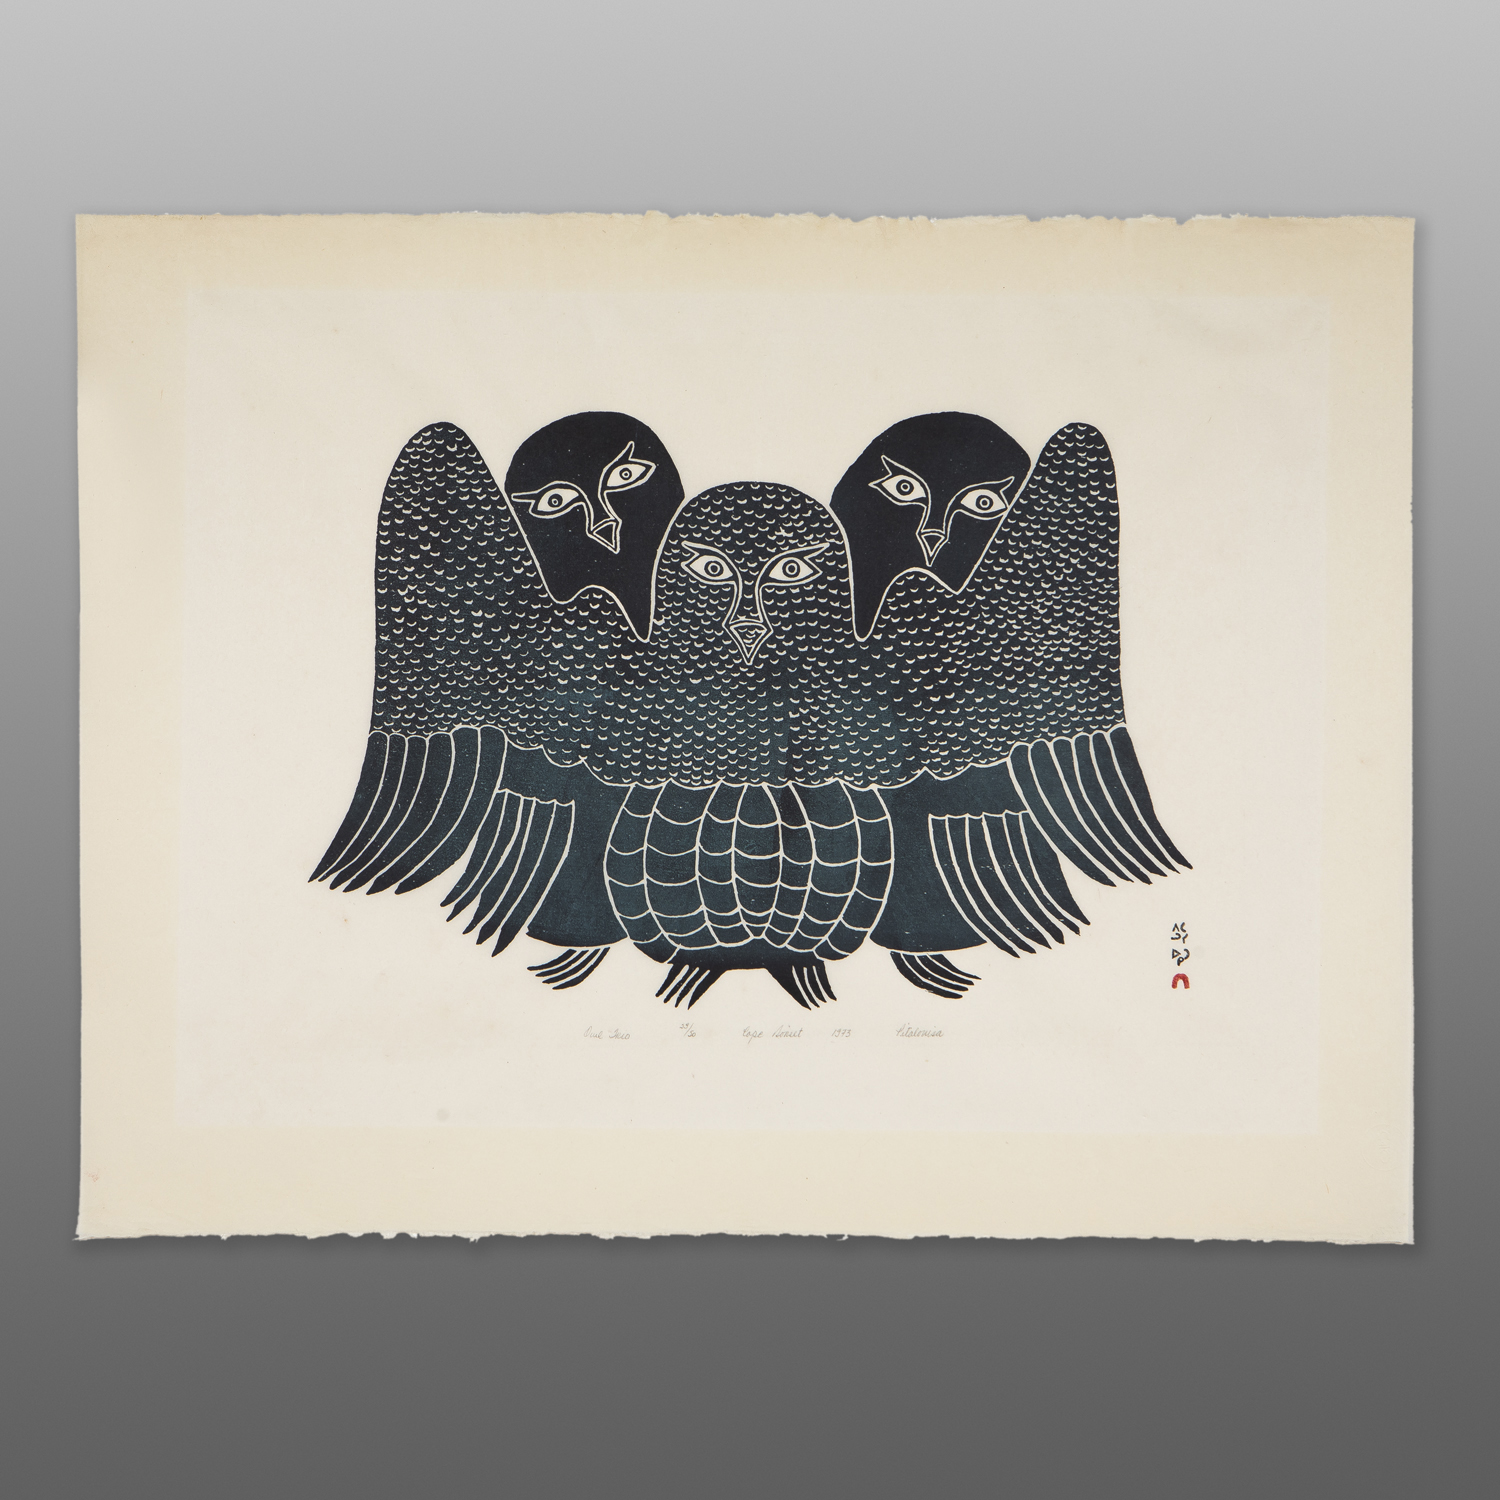 Owl Trio
Pitalousia
Inuit1973 Serigraph
33" x 26"
$900Arctic Bird Show 2024